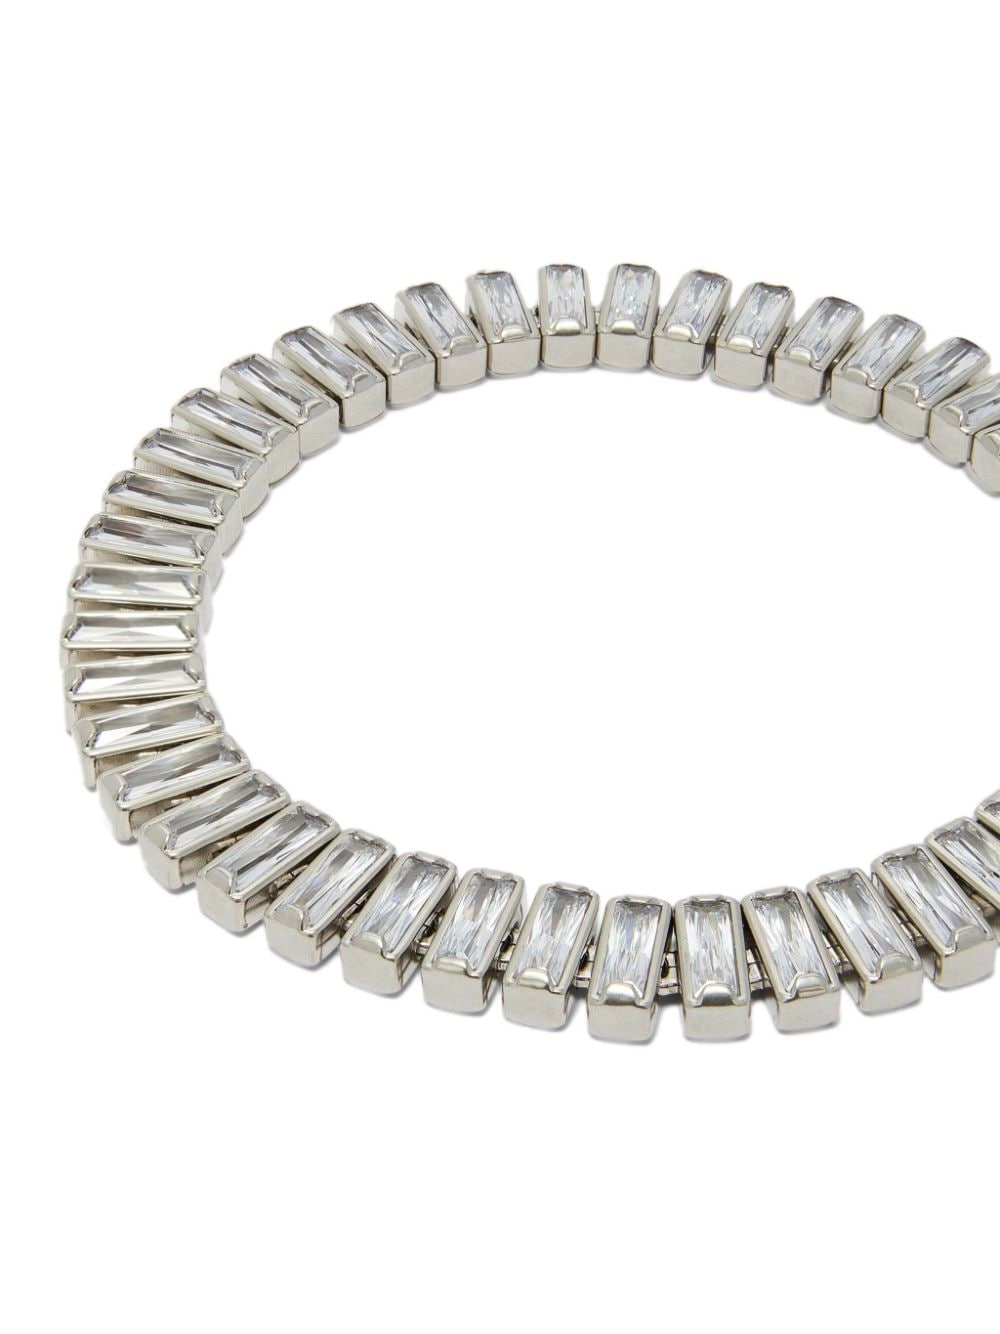 Jil Sander handcrafted brass necklace with row of zircons - Grijs